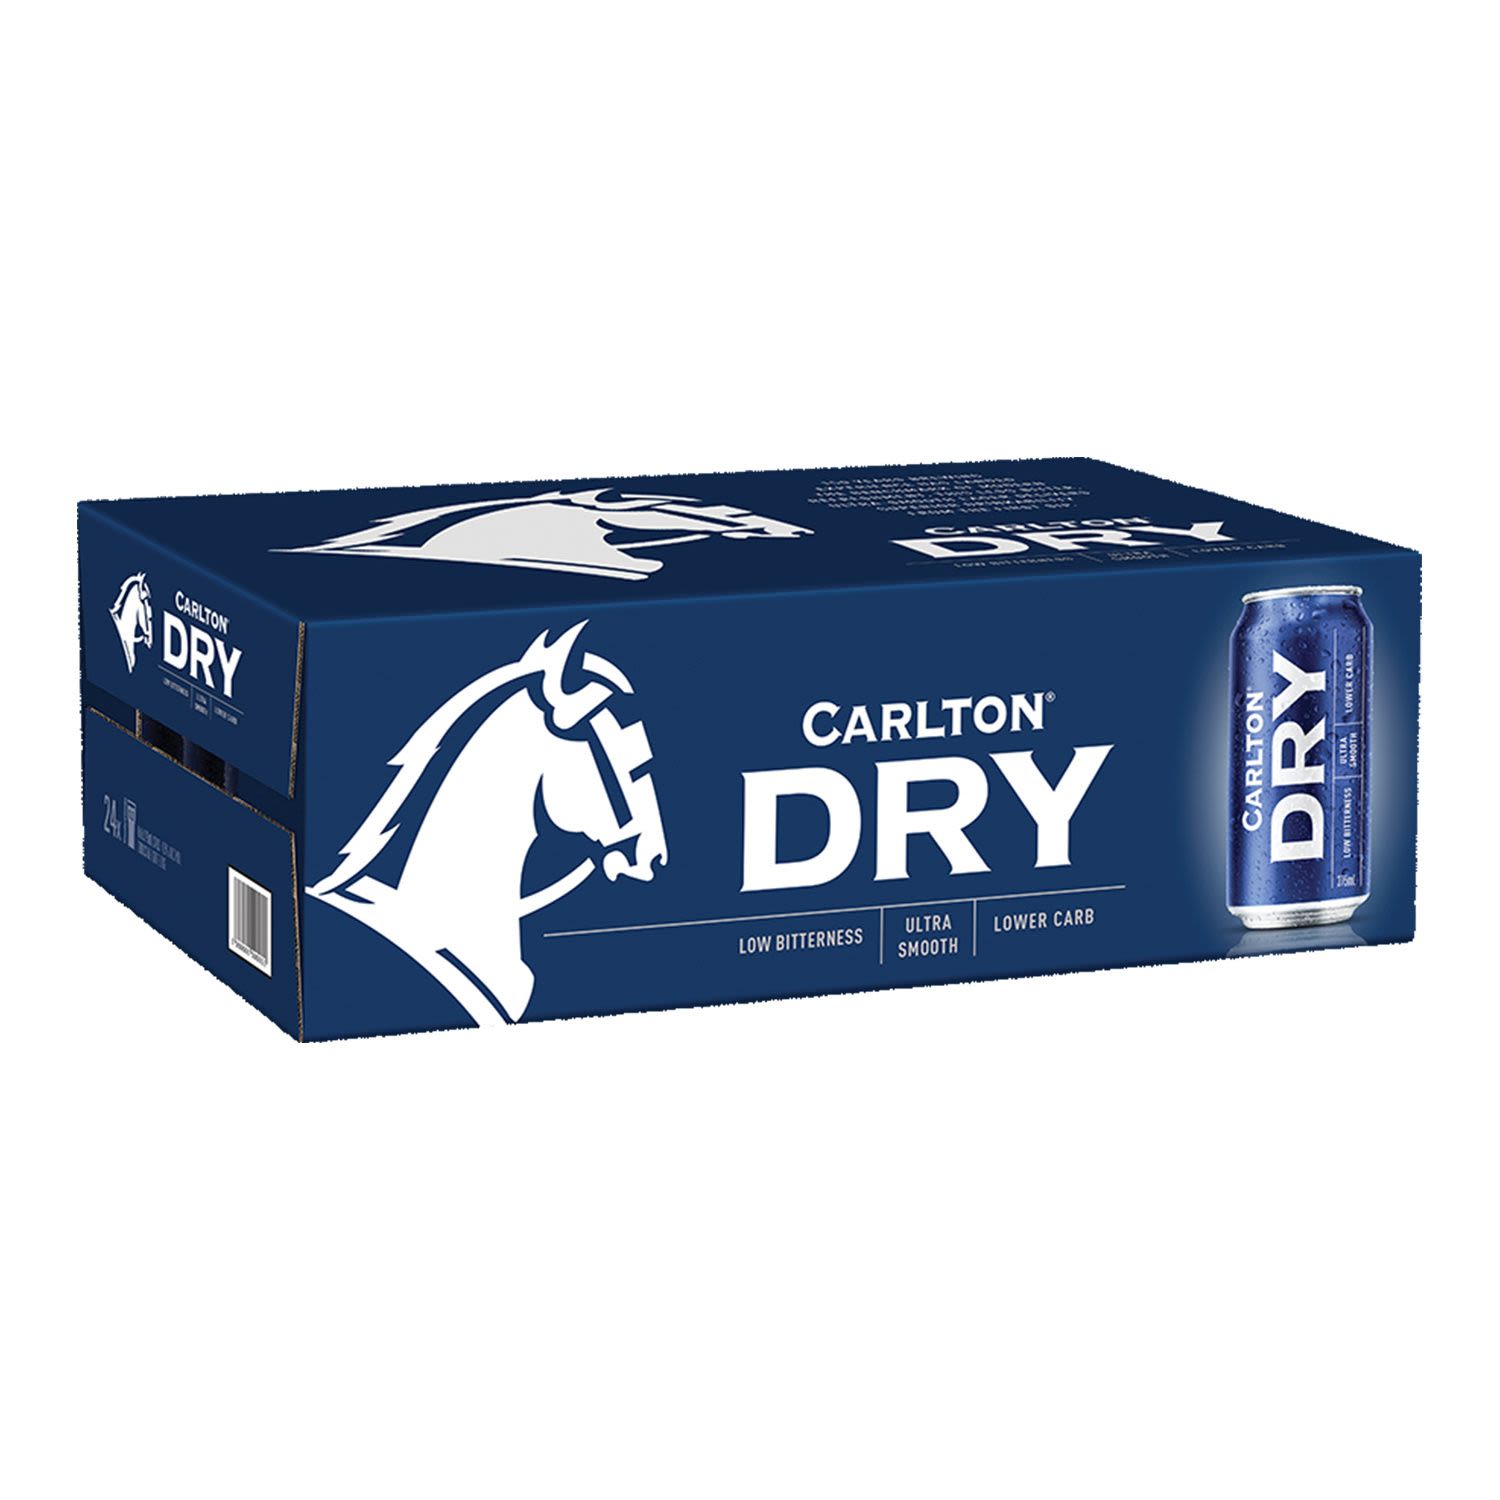 Carlton Dry Can 375mL 24 Pack